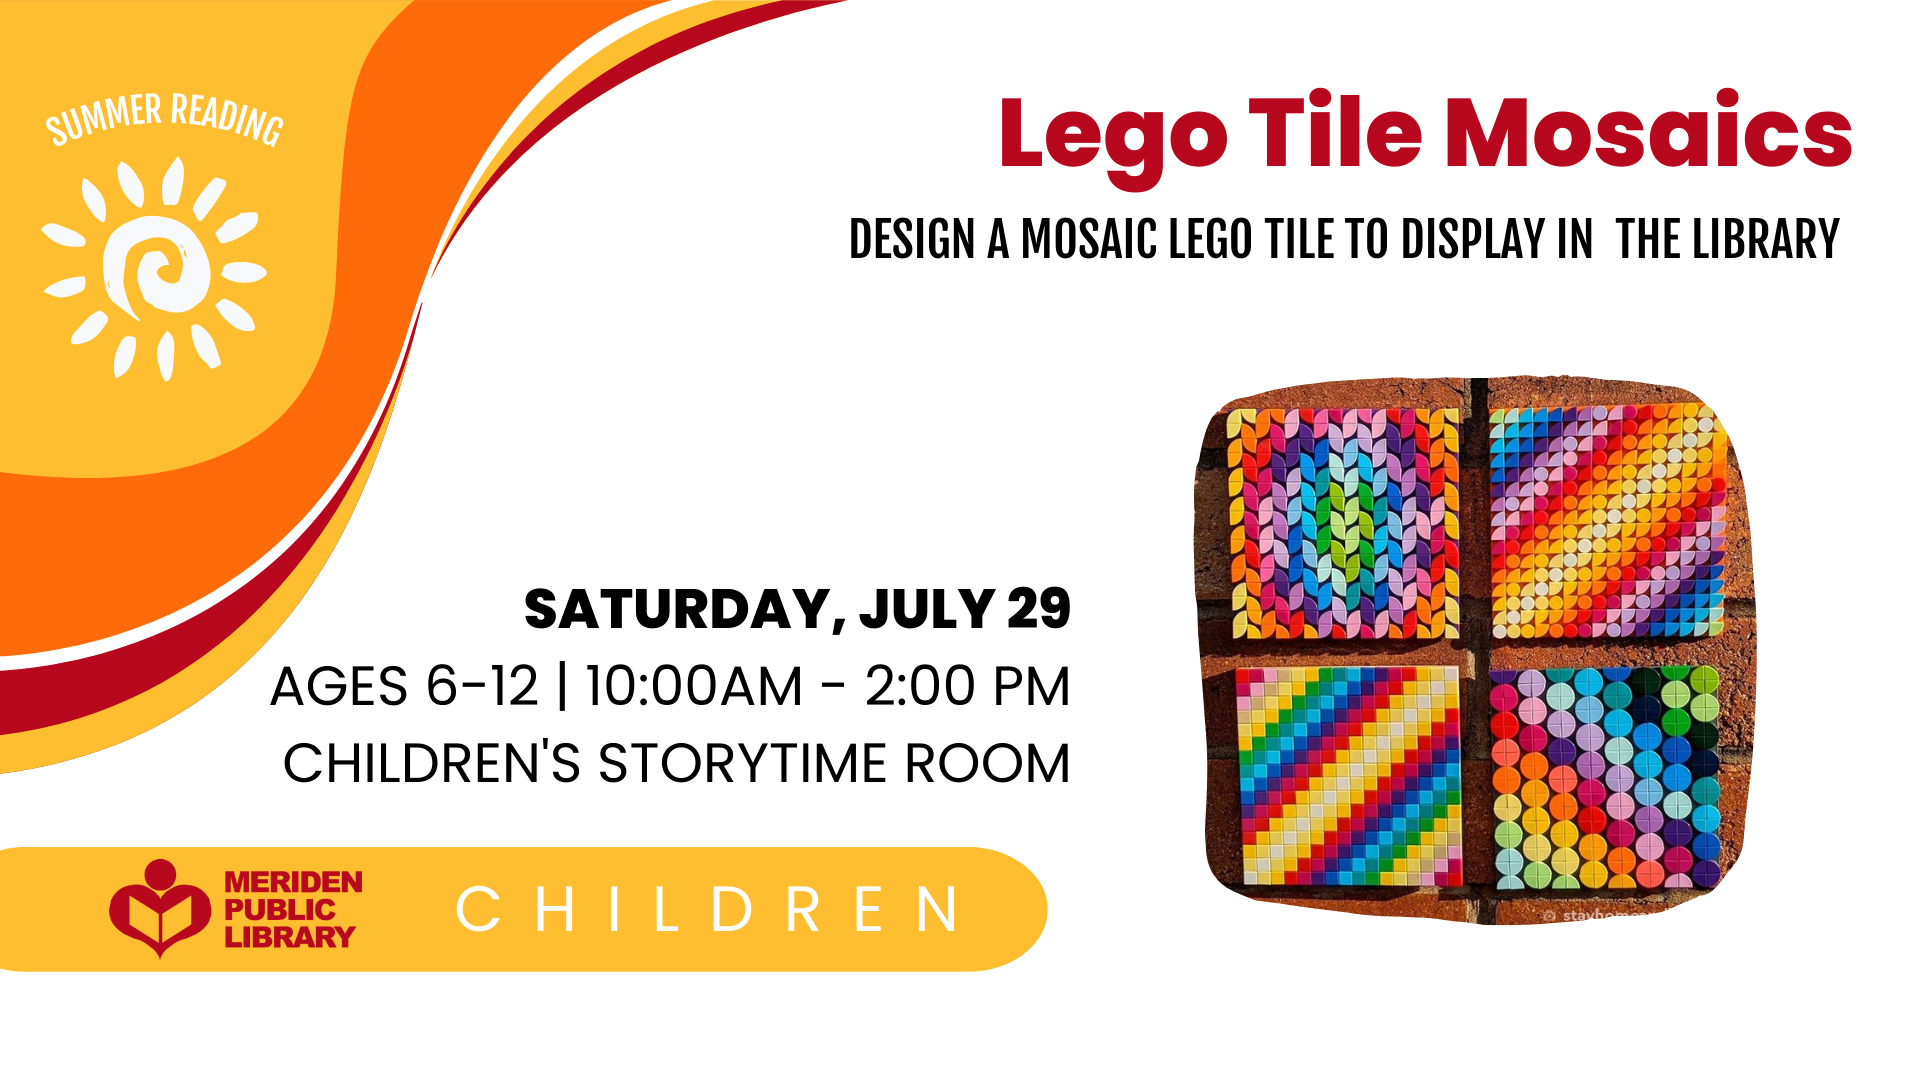 Lego Tiles Mosaic